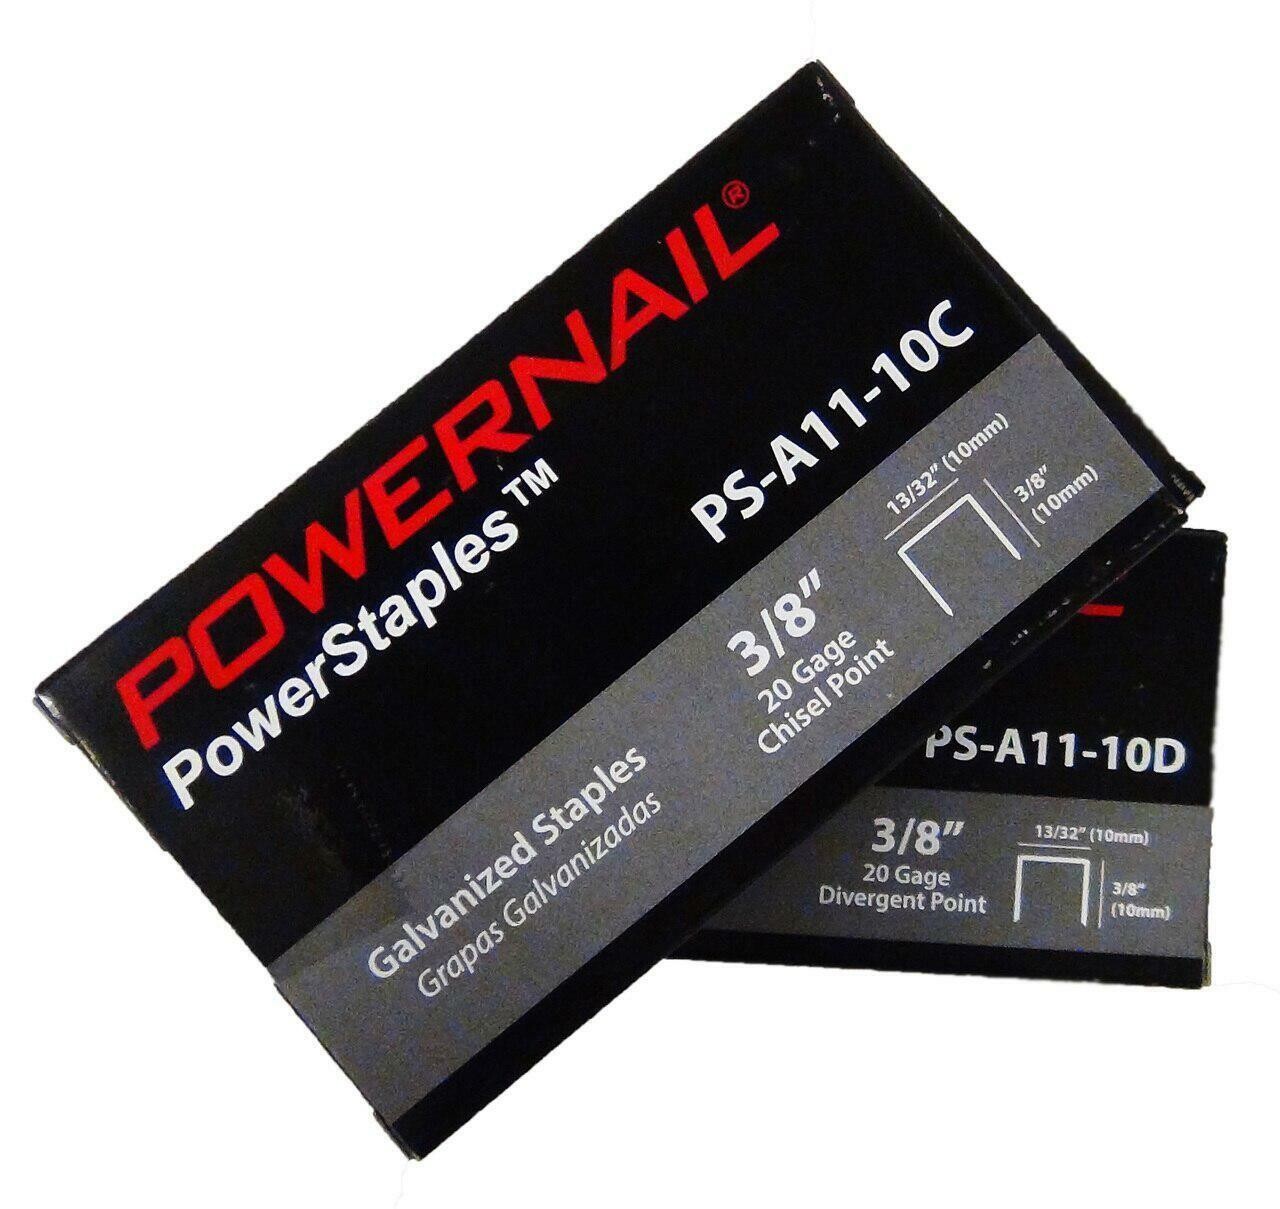 Powernail PS-5010C 5-16" Chisel Point Staples (5,000-box)